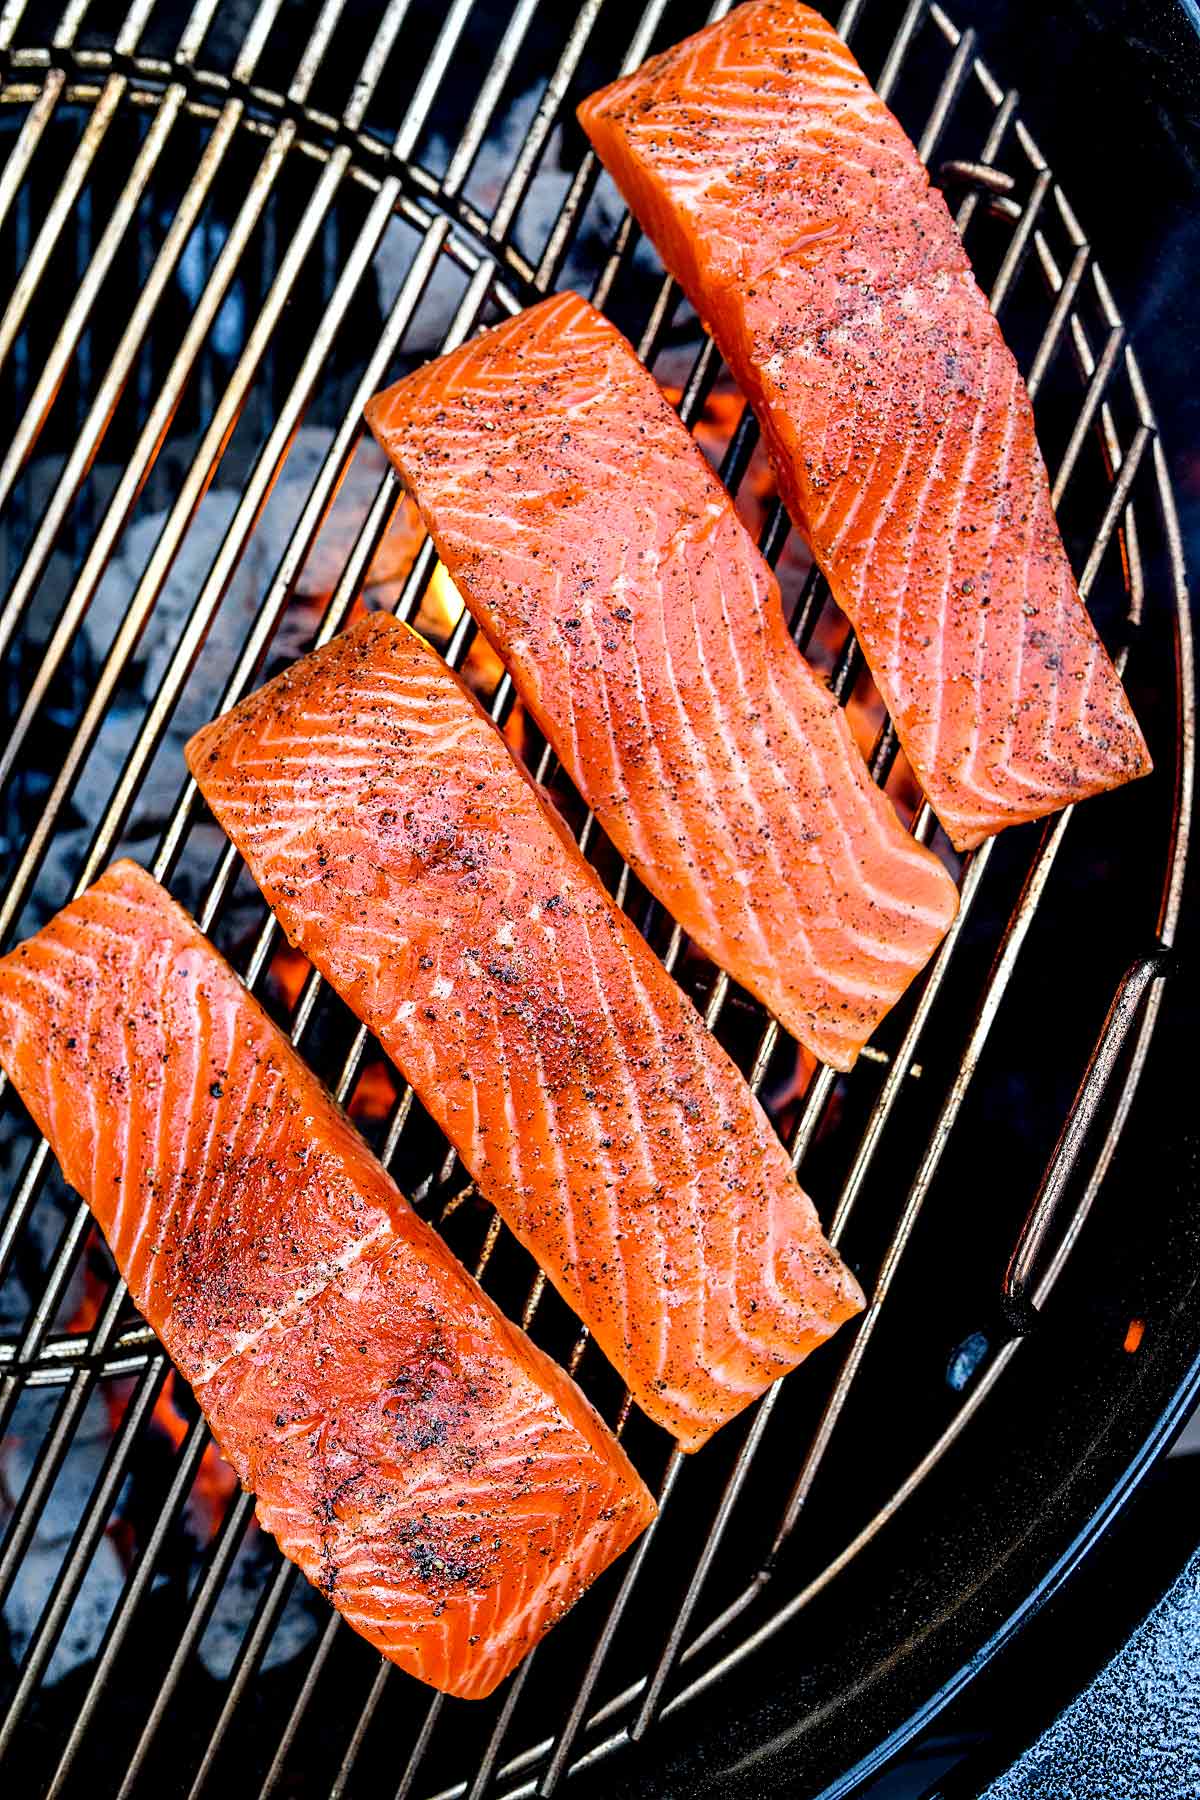 Grilled Salmon Foodiecrush.com 009 